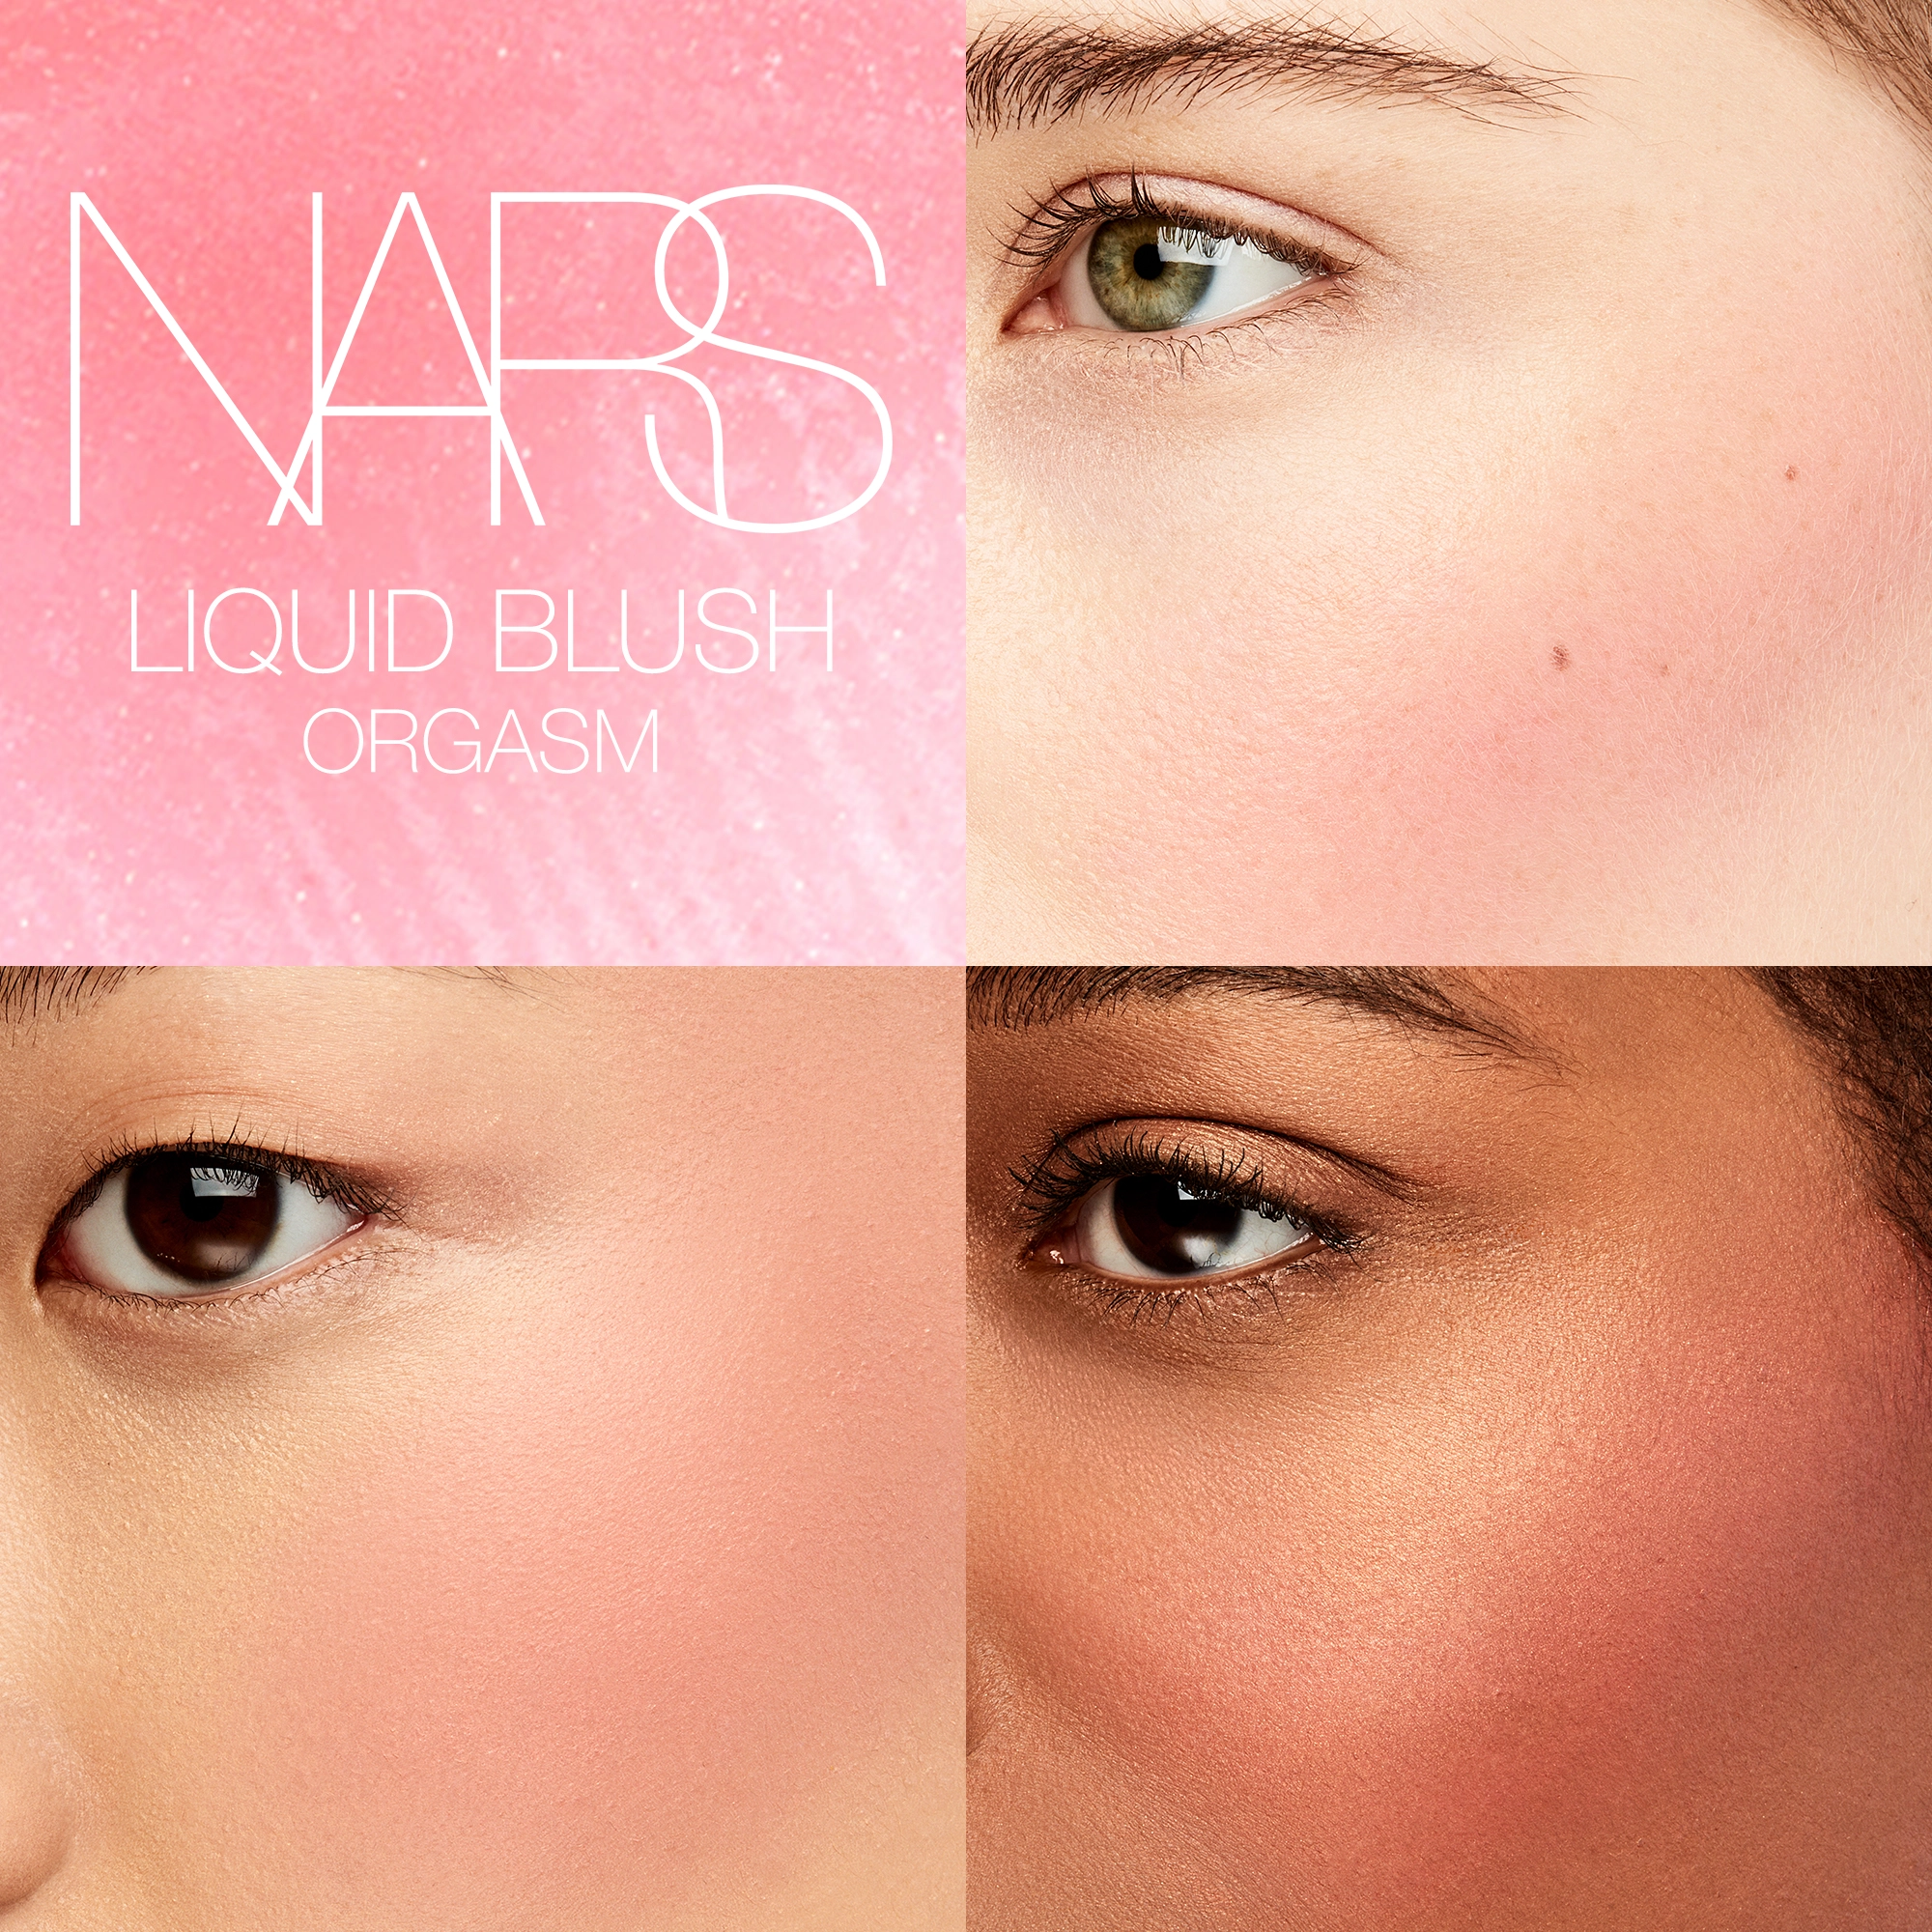 NARS Blush - Blush, Contour, Highlighting